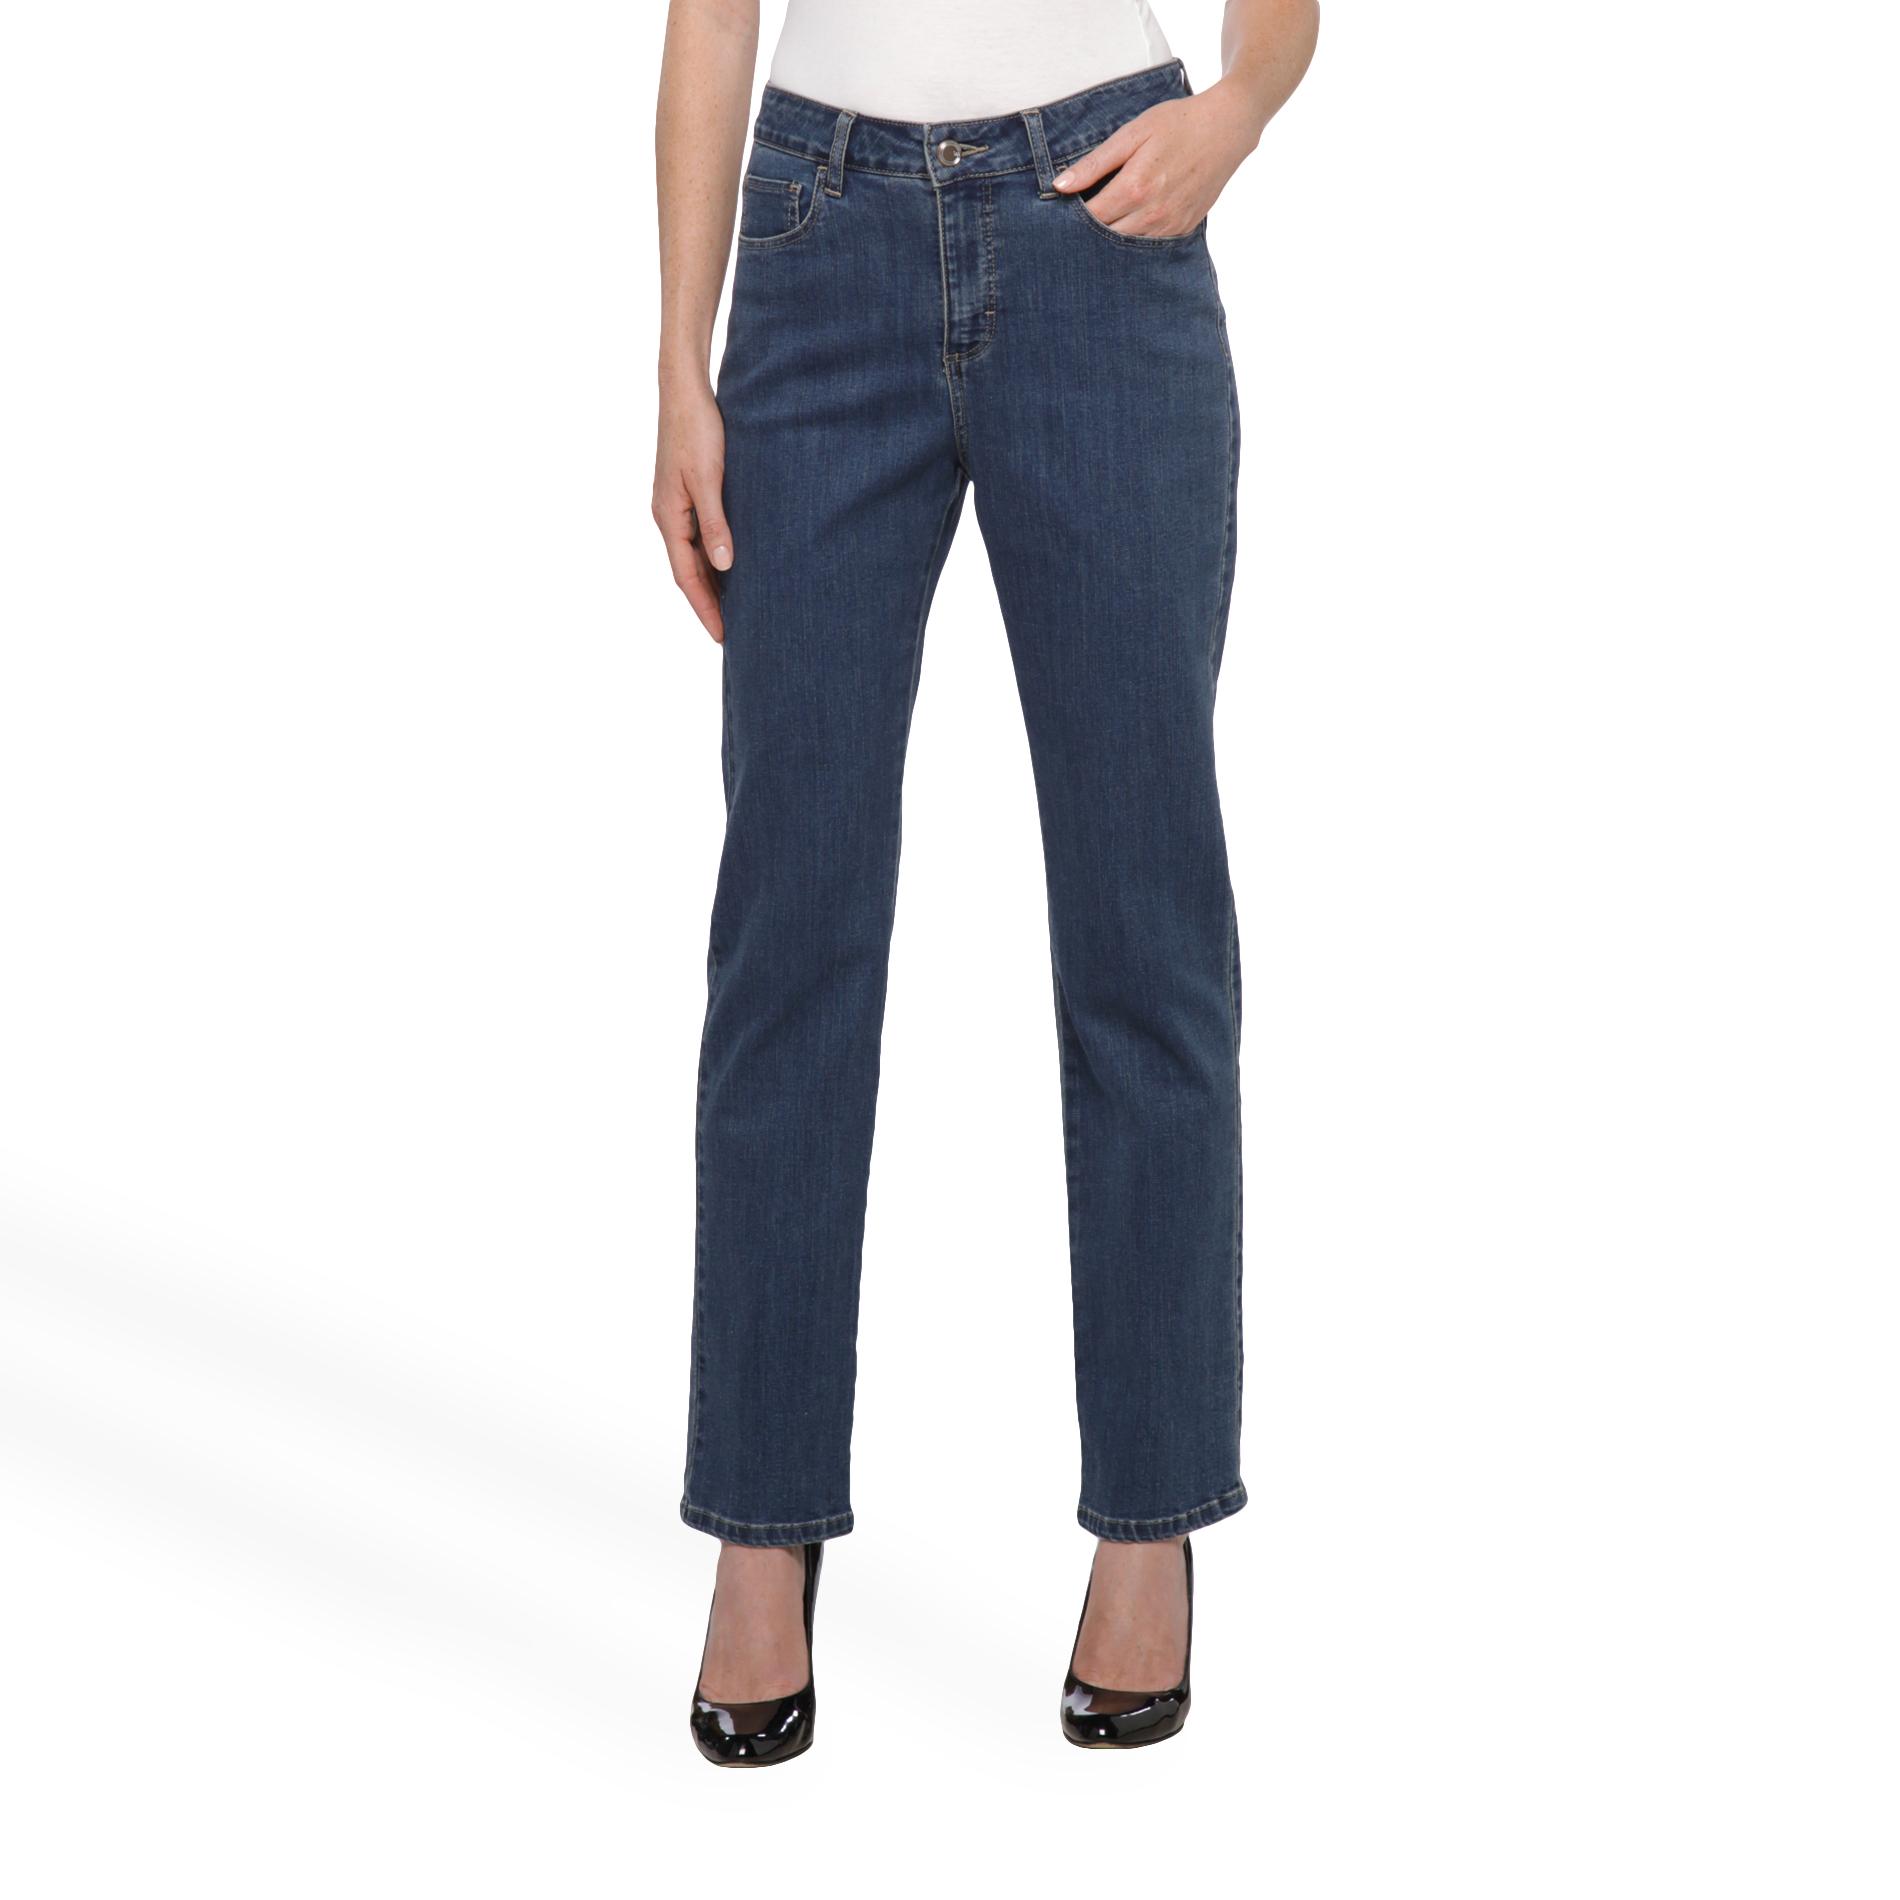 Women's Classic Fit Jeans